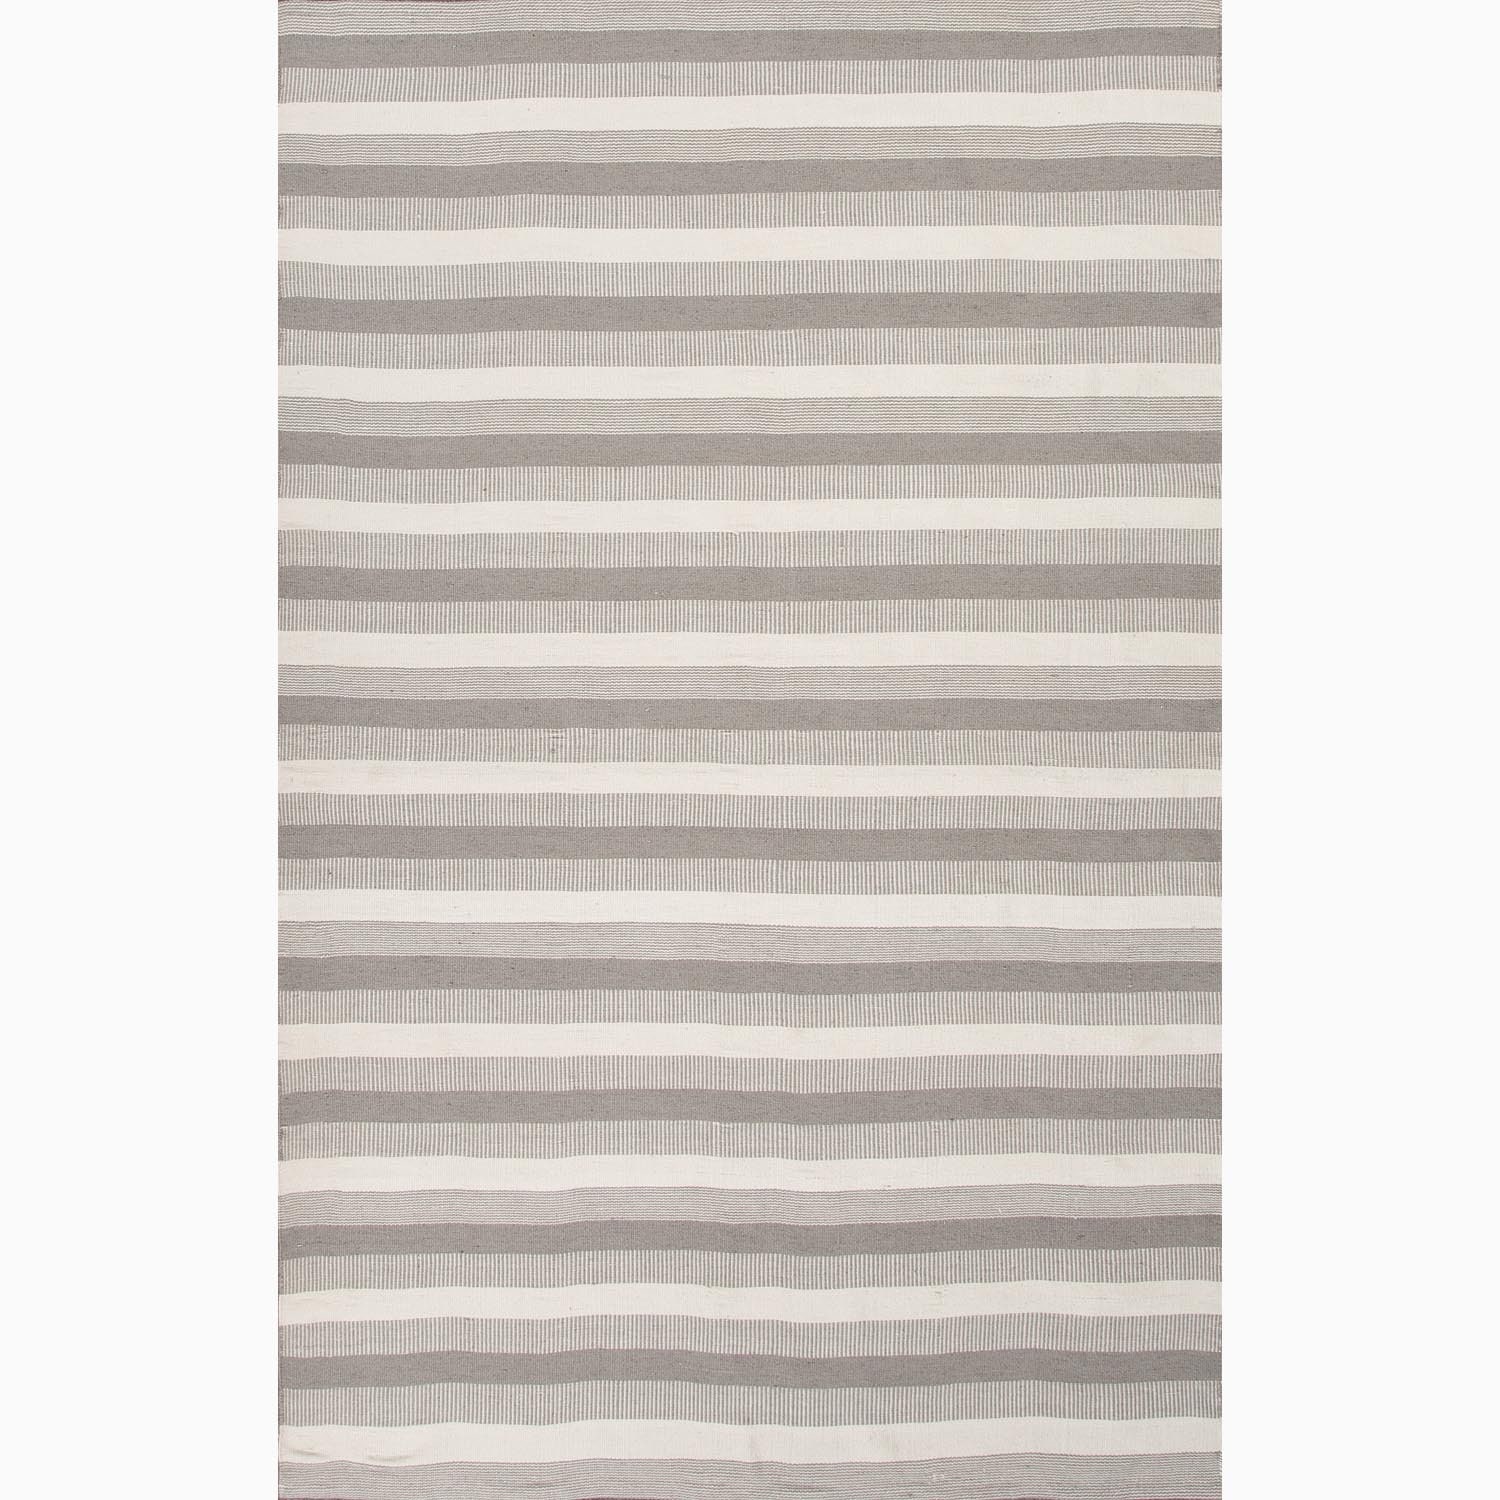 Handmade Gray/ Ivory Striped Polyester Reversible Rug (2 X 3)